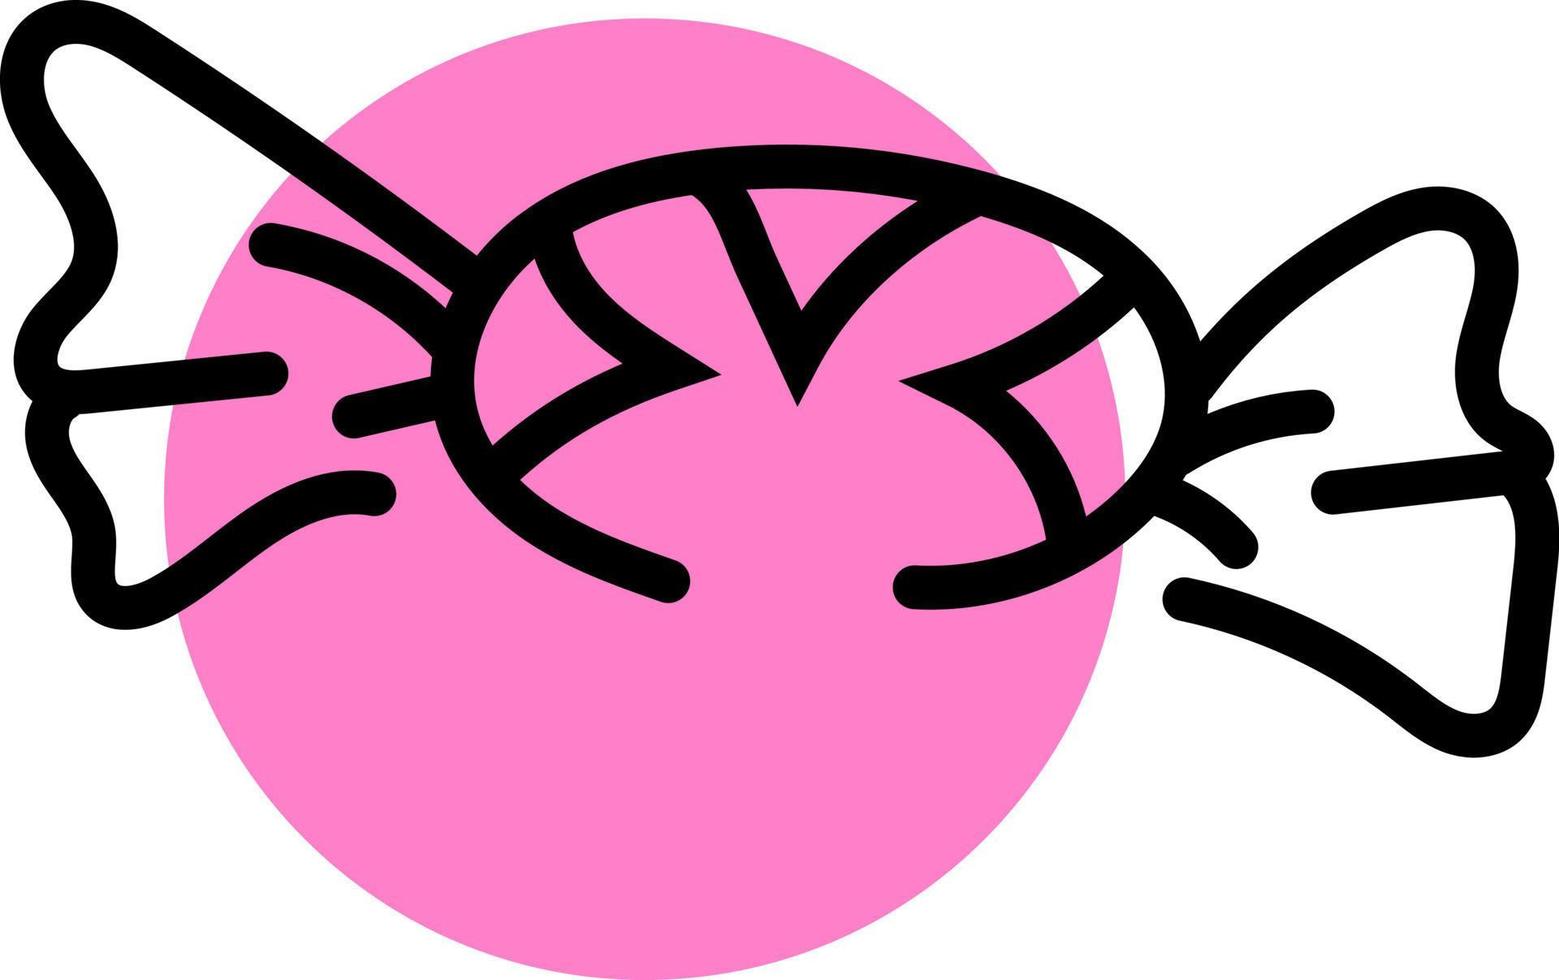 godis i en rosa omslag, illustration, vektor på en vit bakgrund